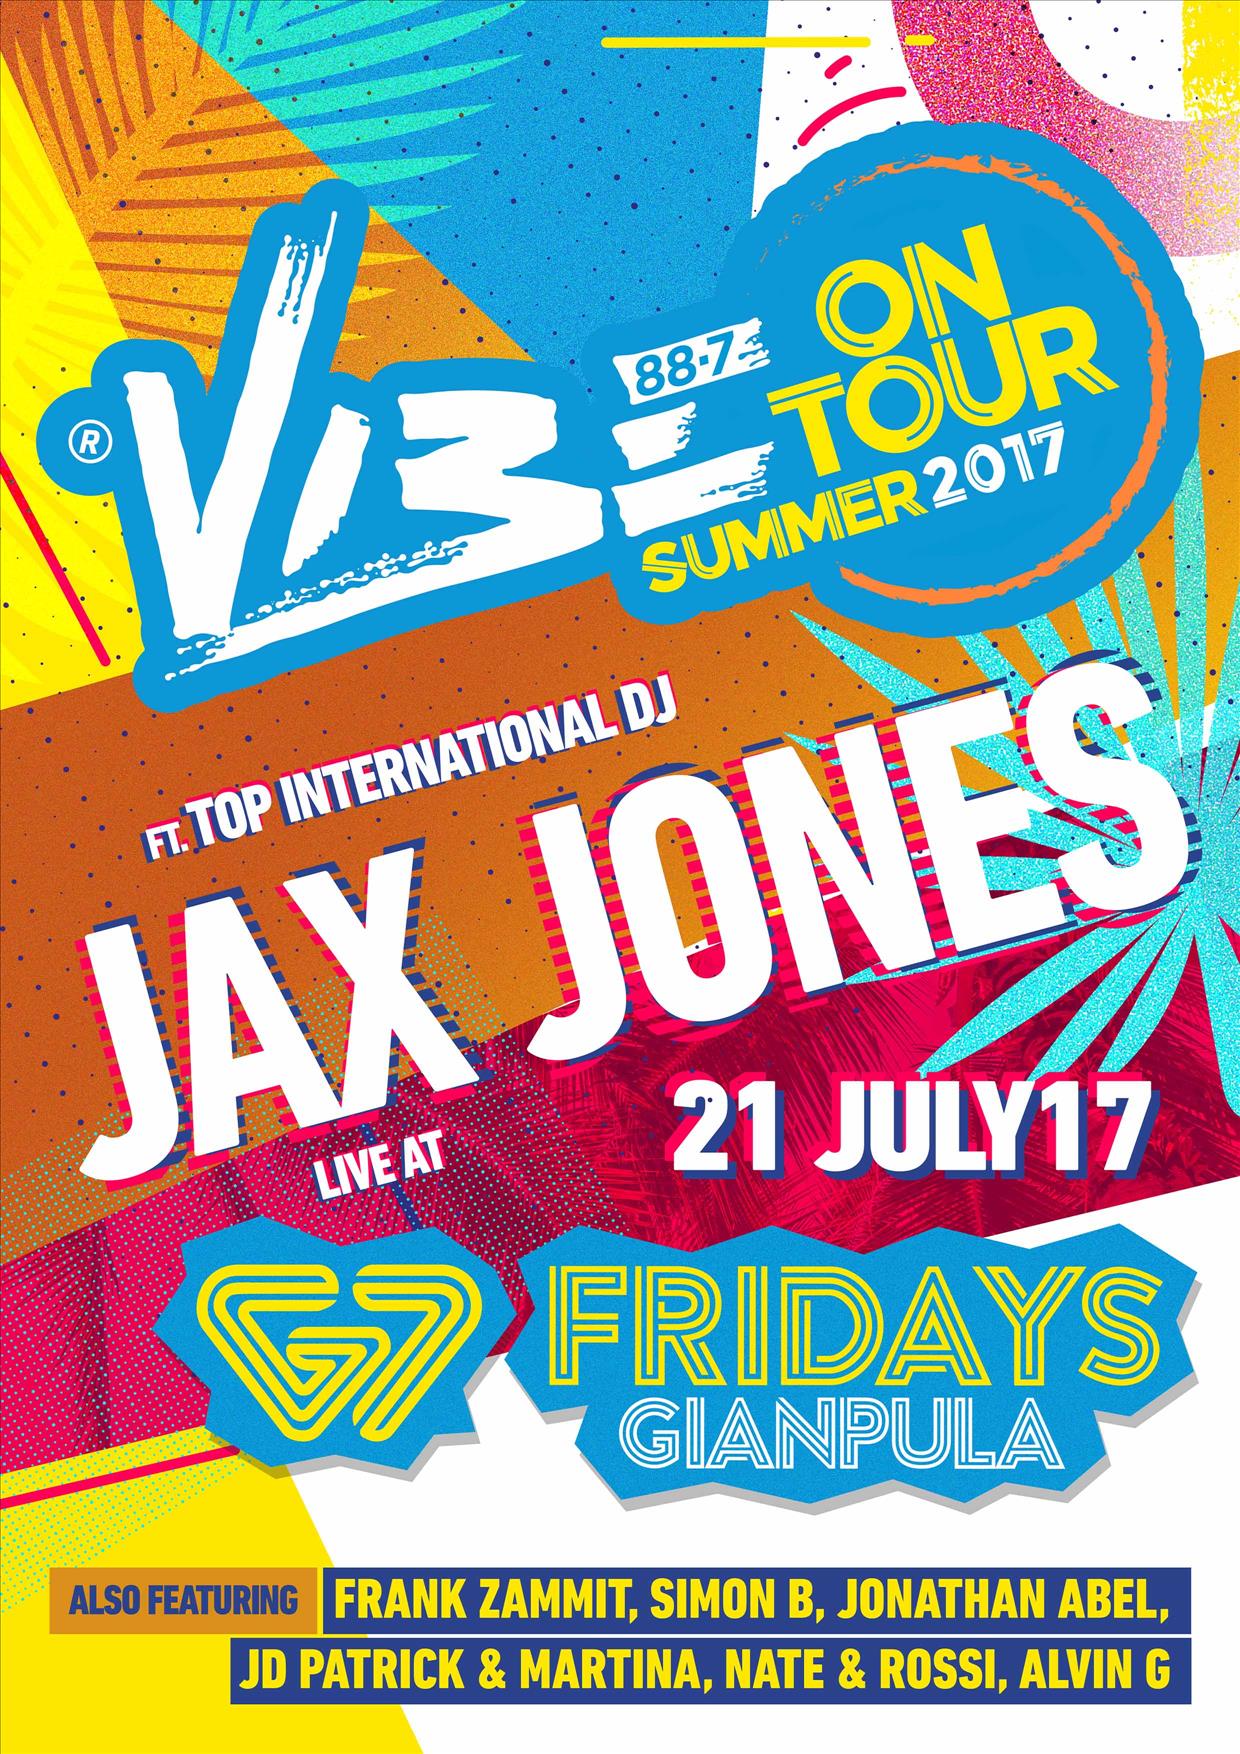 VIBE on TOUR present JAX JONES at G7Fridays Gianpula poster